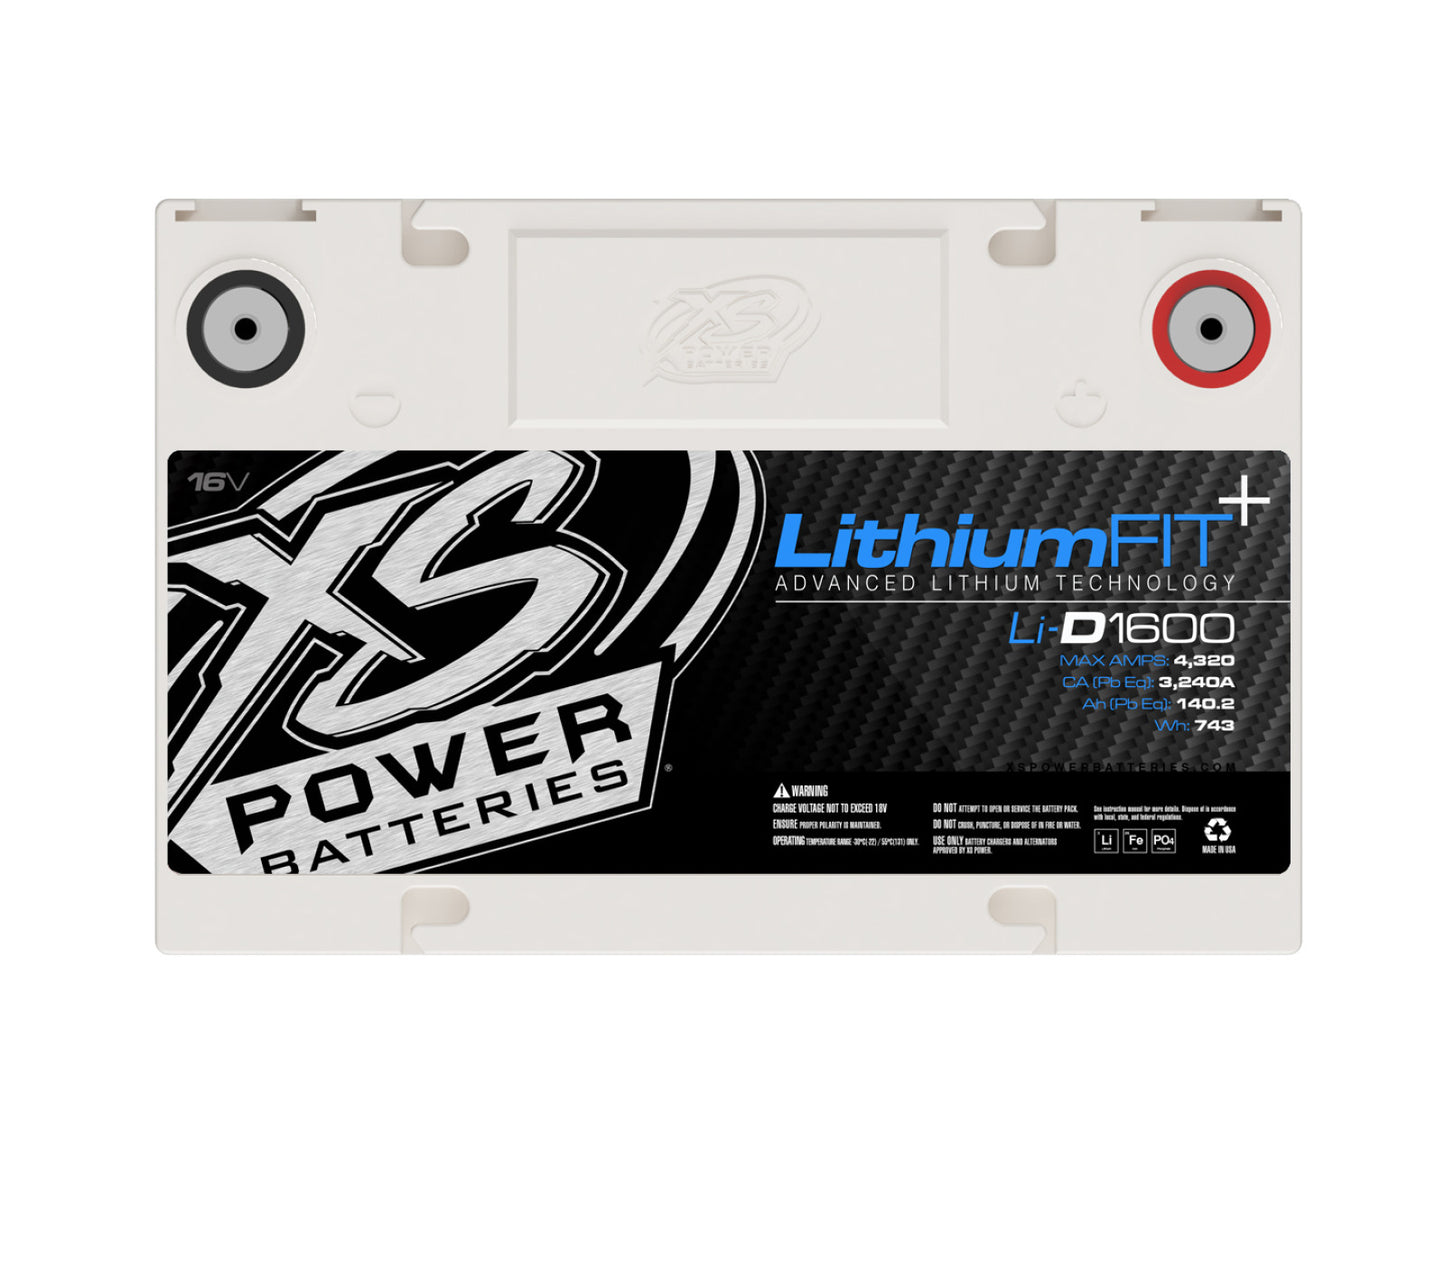 XS Power Batteries Lithium Racing 16V Batteries - Stud Adaptors/Terminal Bolts Included 4320 Max Amps Li-D1600